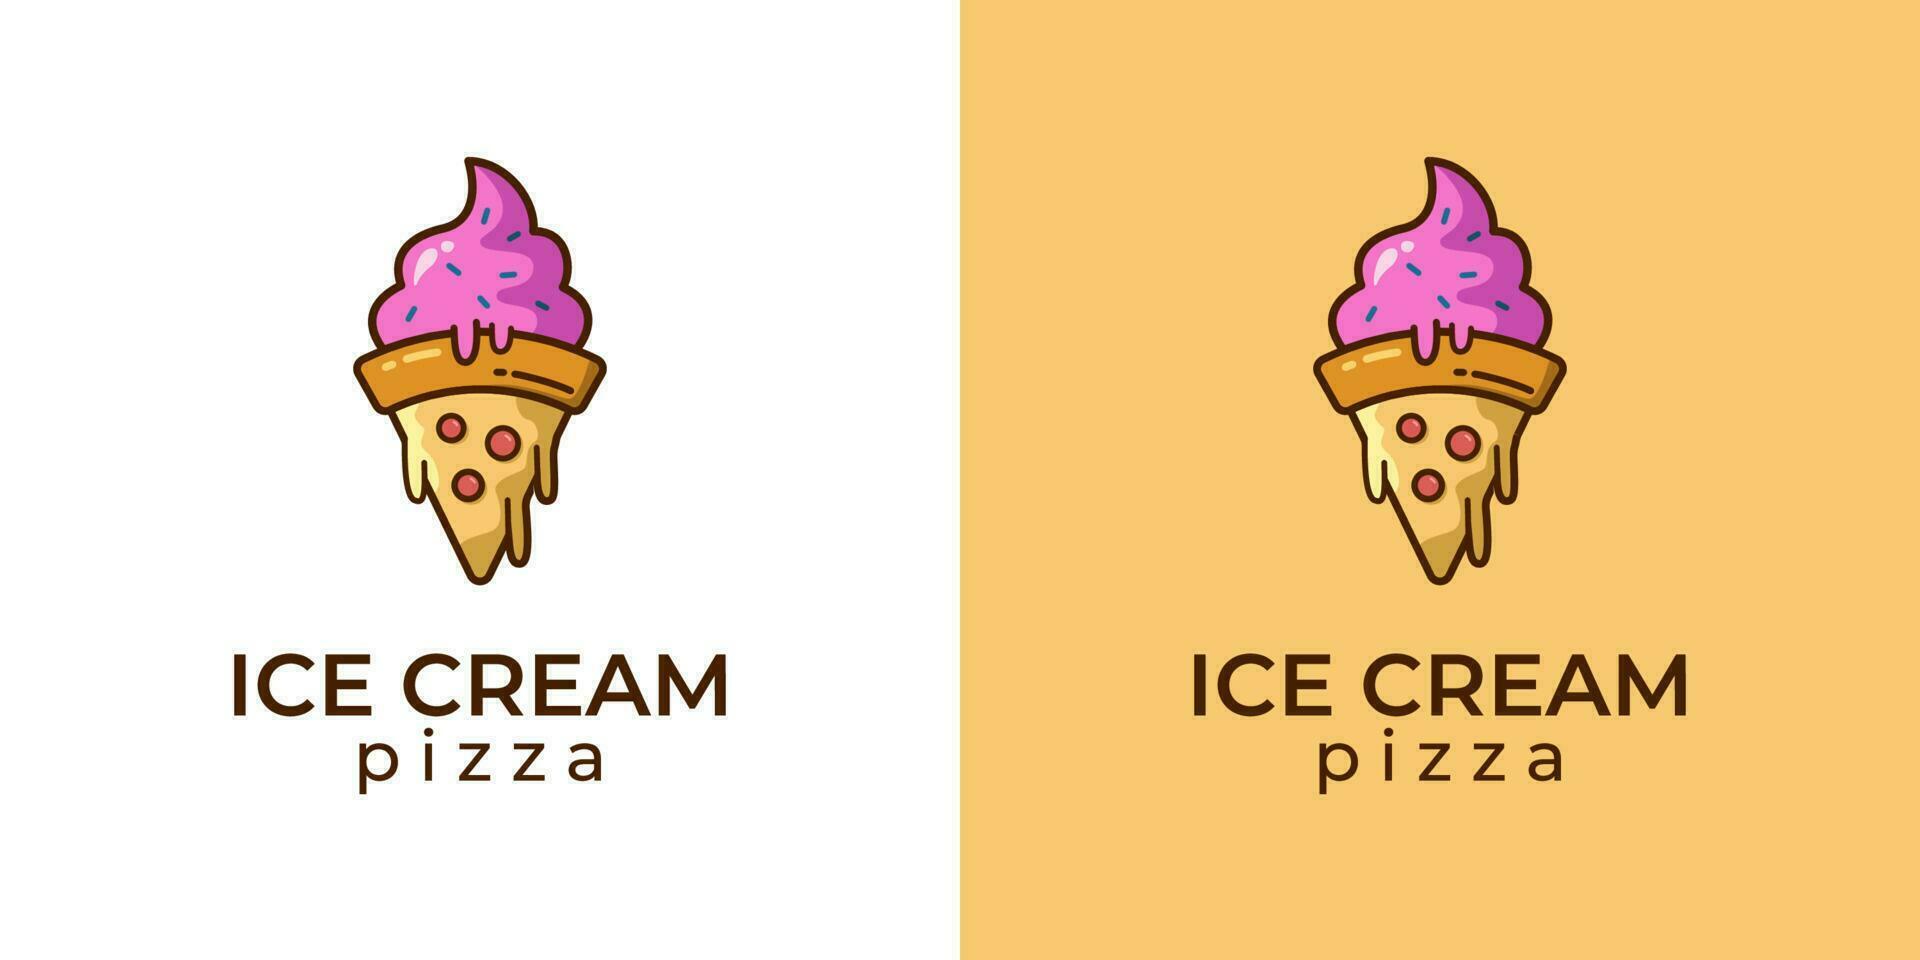 ice cream and pizza logo design inspiration vector